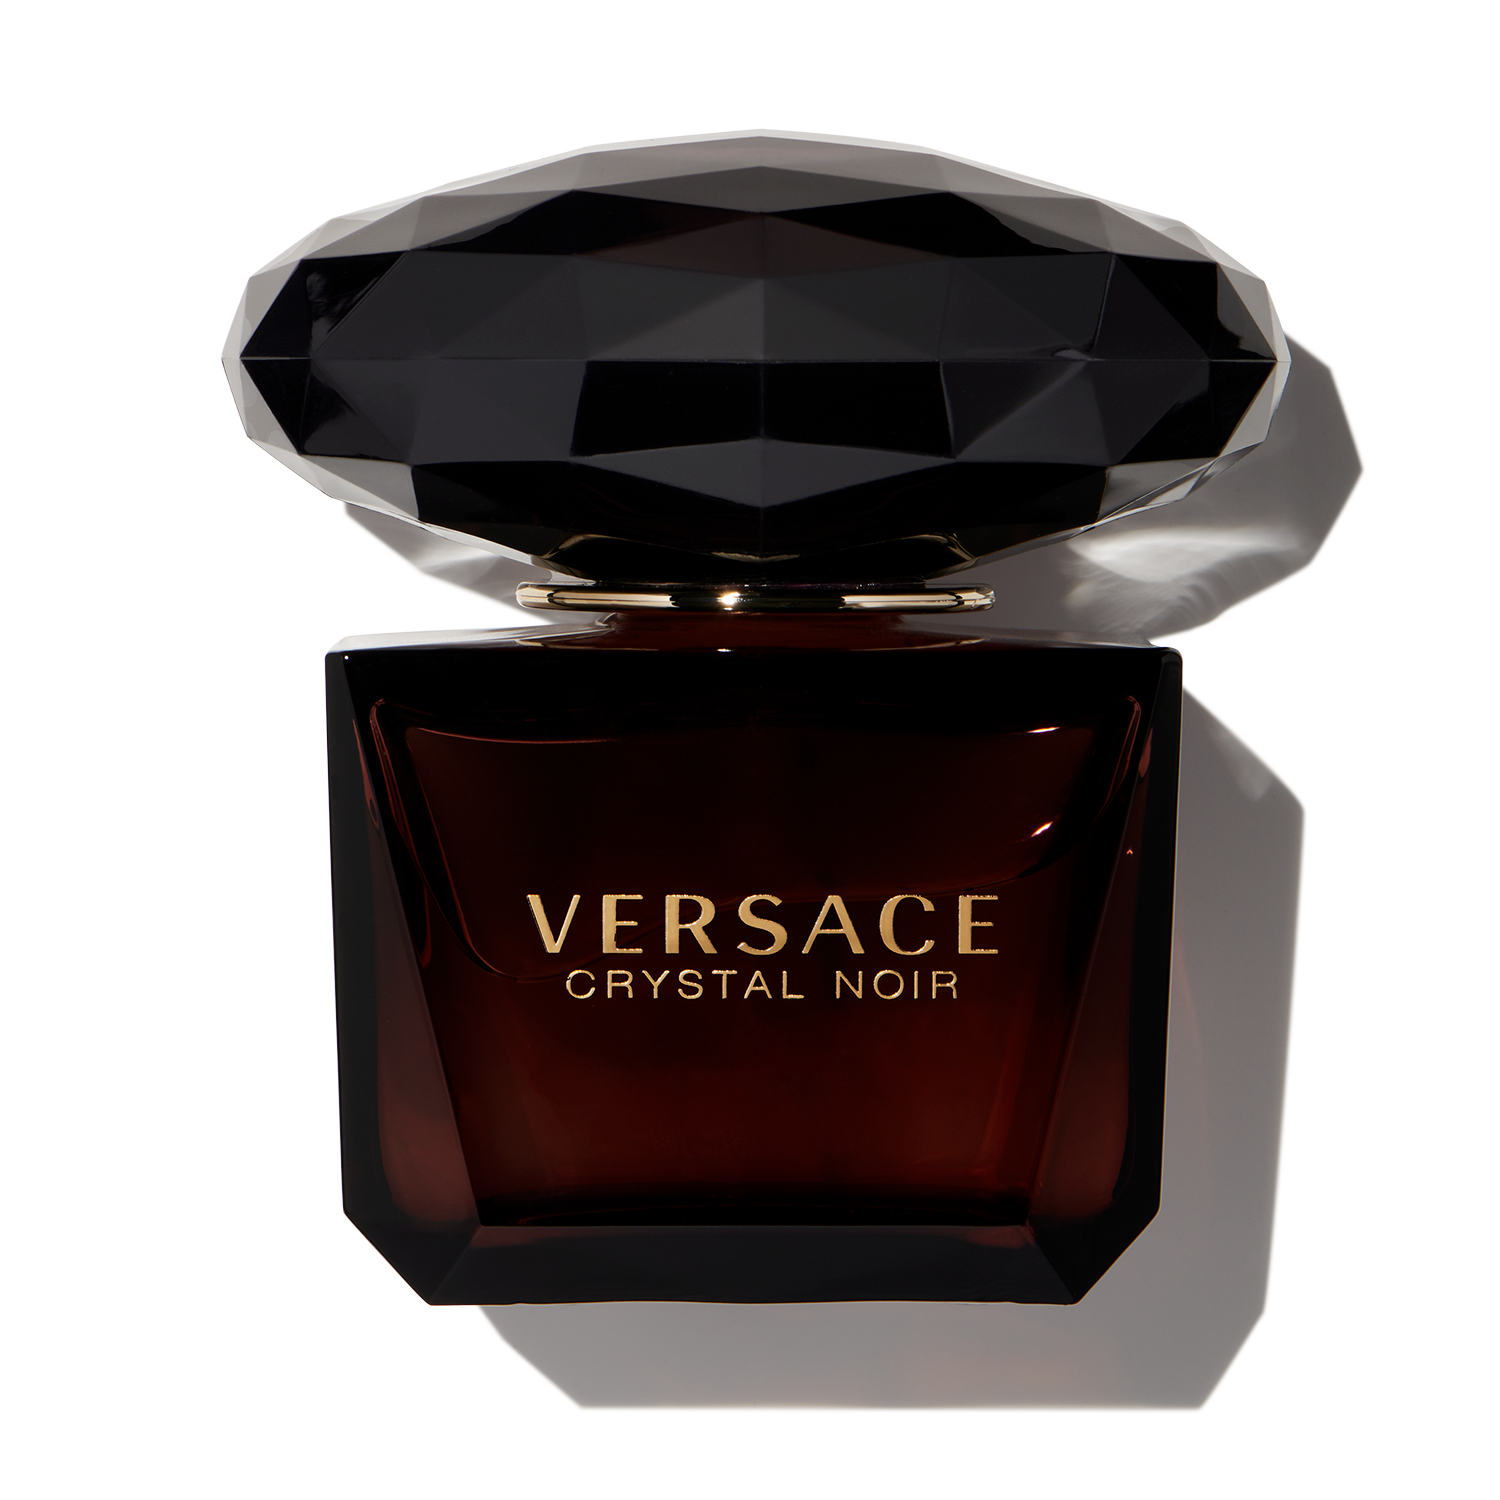 Senator Leeg de prullenbak wazig Versace Crystal Noir | Buy Versace Crystal Noir Perfume